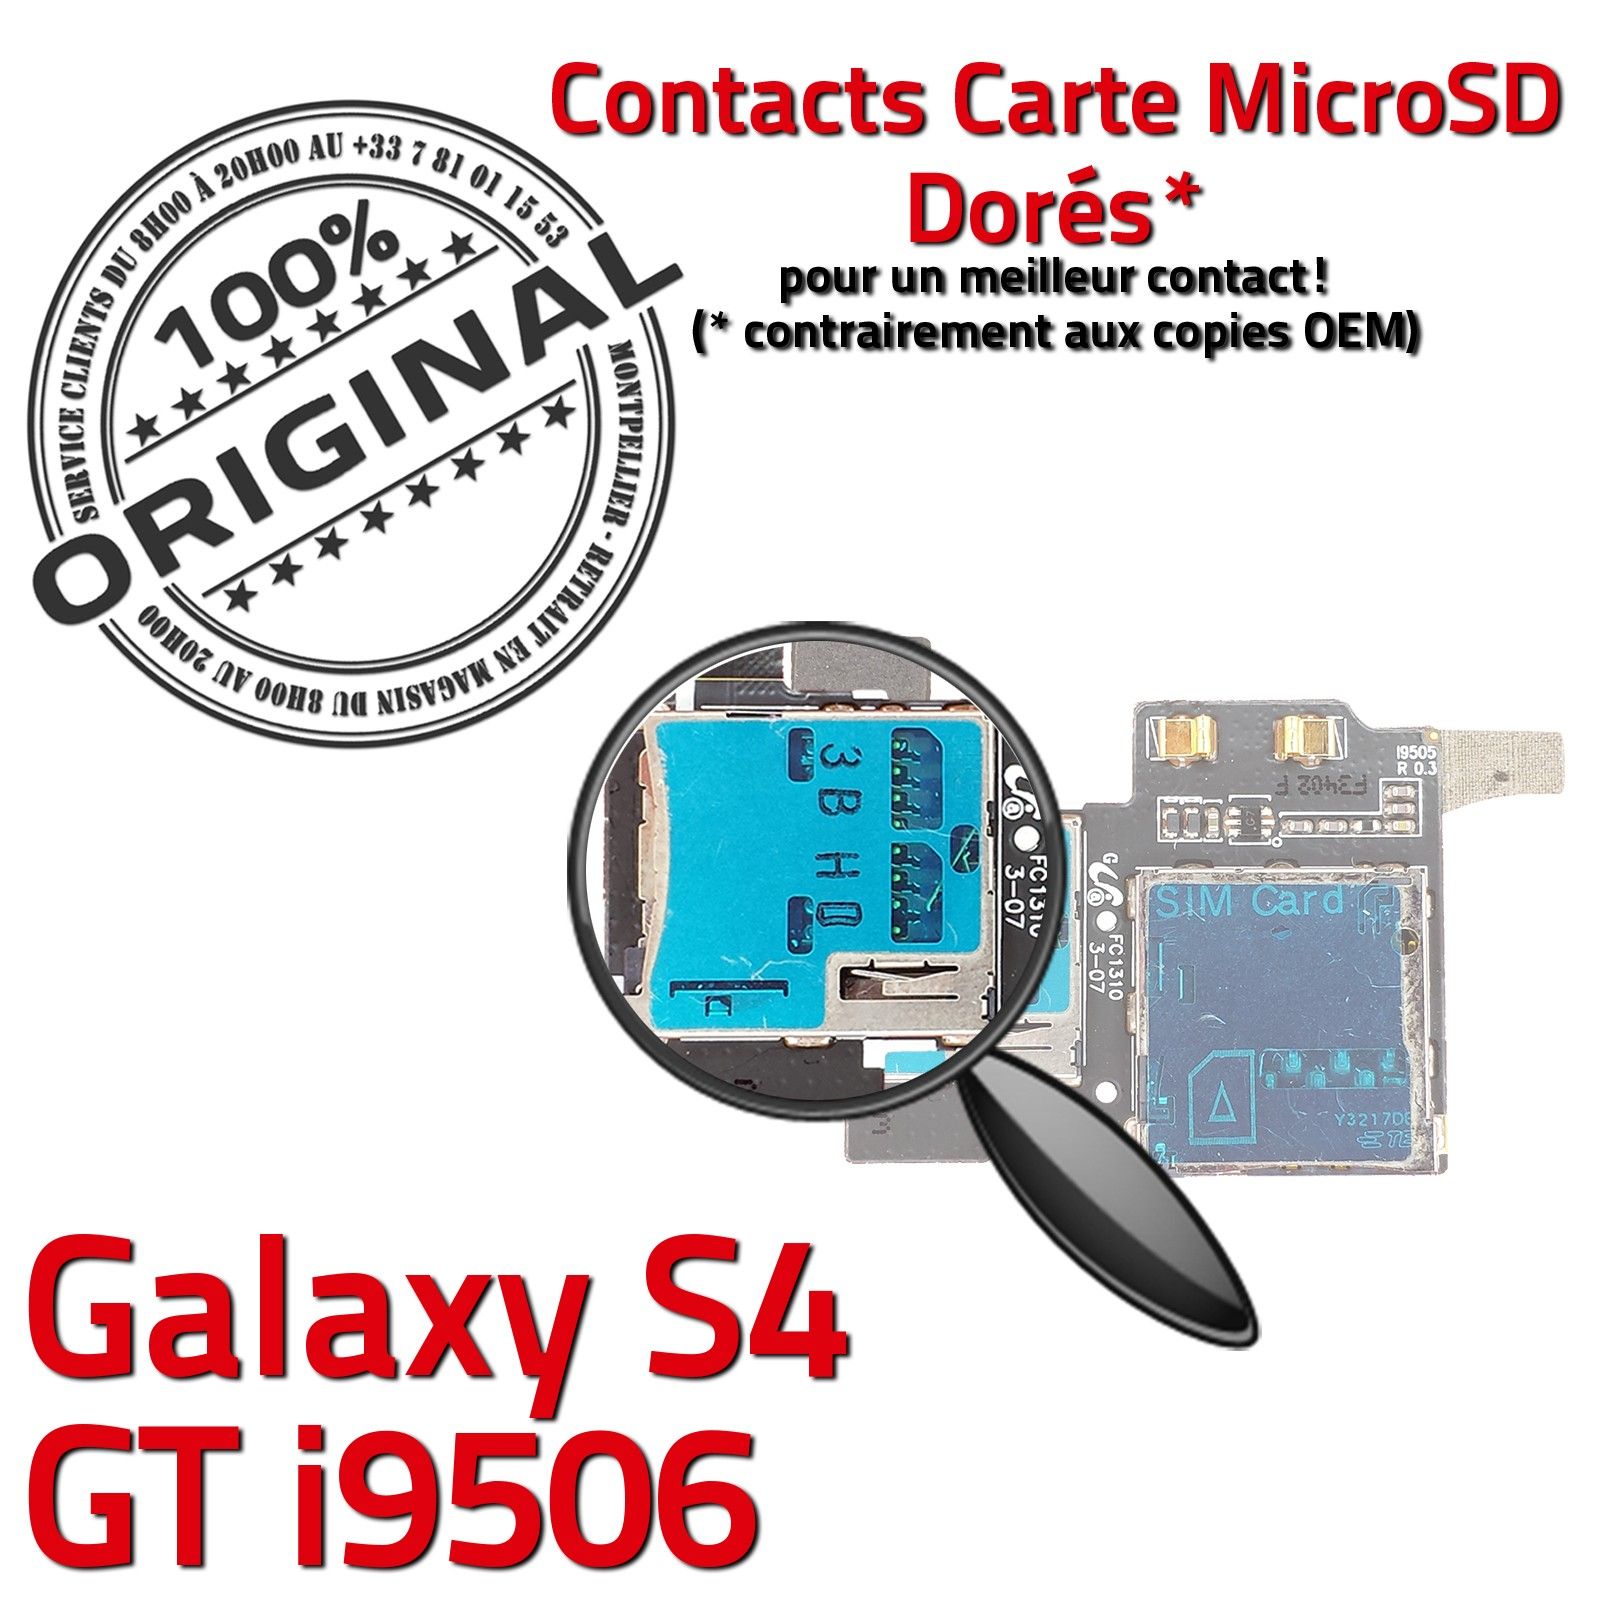 https://media1.24hshop.fr/8139-thickbox_default/original-lecteur-carte-memoire-samsung-galaxy-s4-gt-i9506-sim-micro-sd-connecteur-contacts-dores-reader-connector-nappe-qualite.jpg